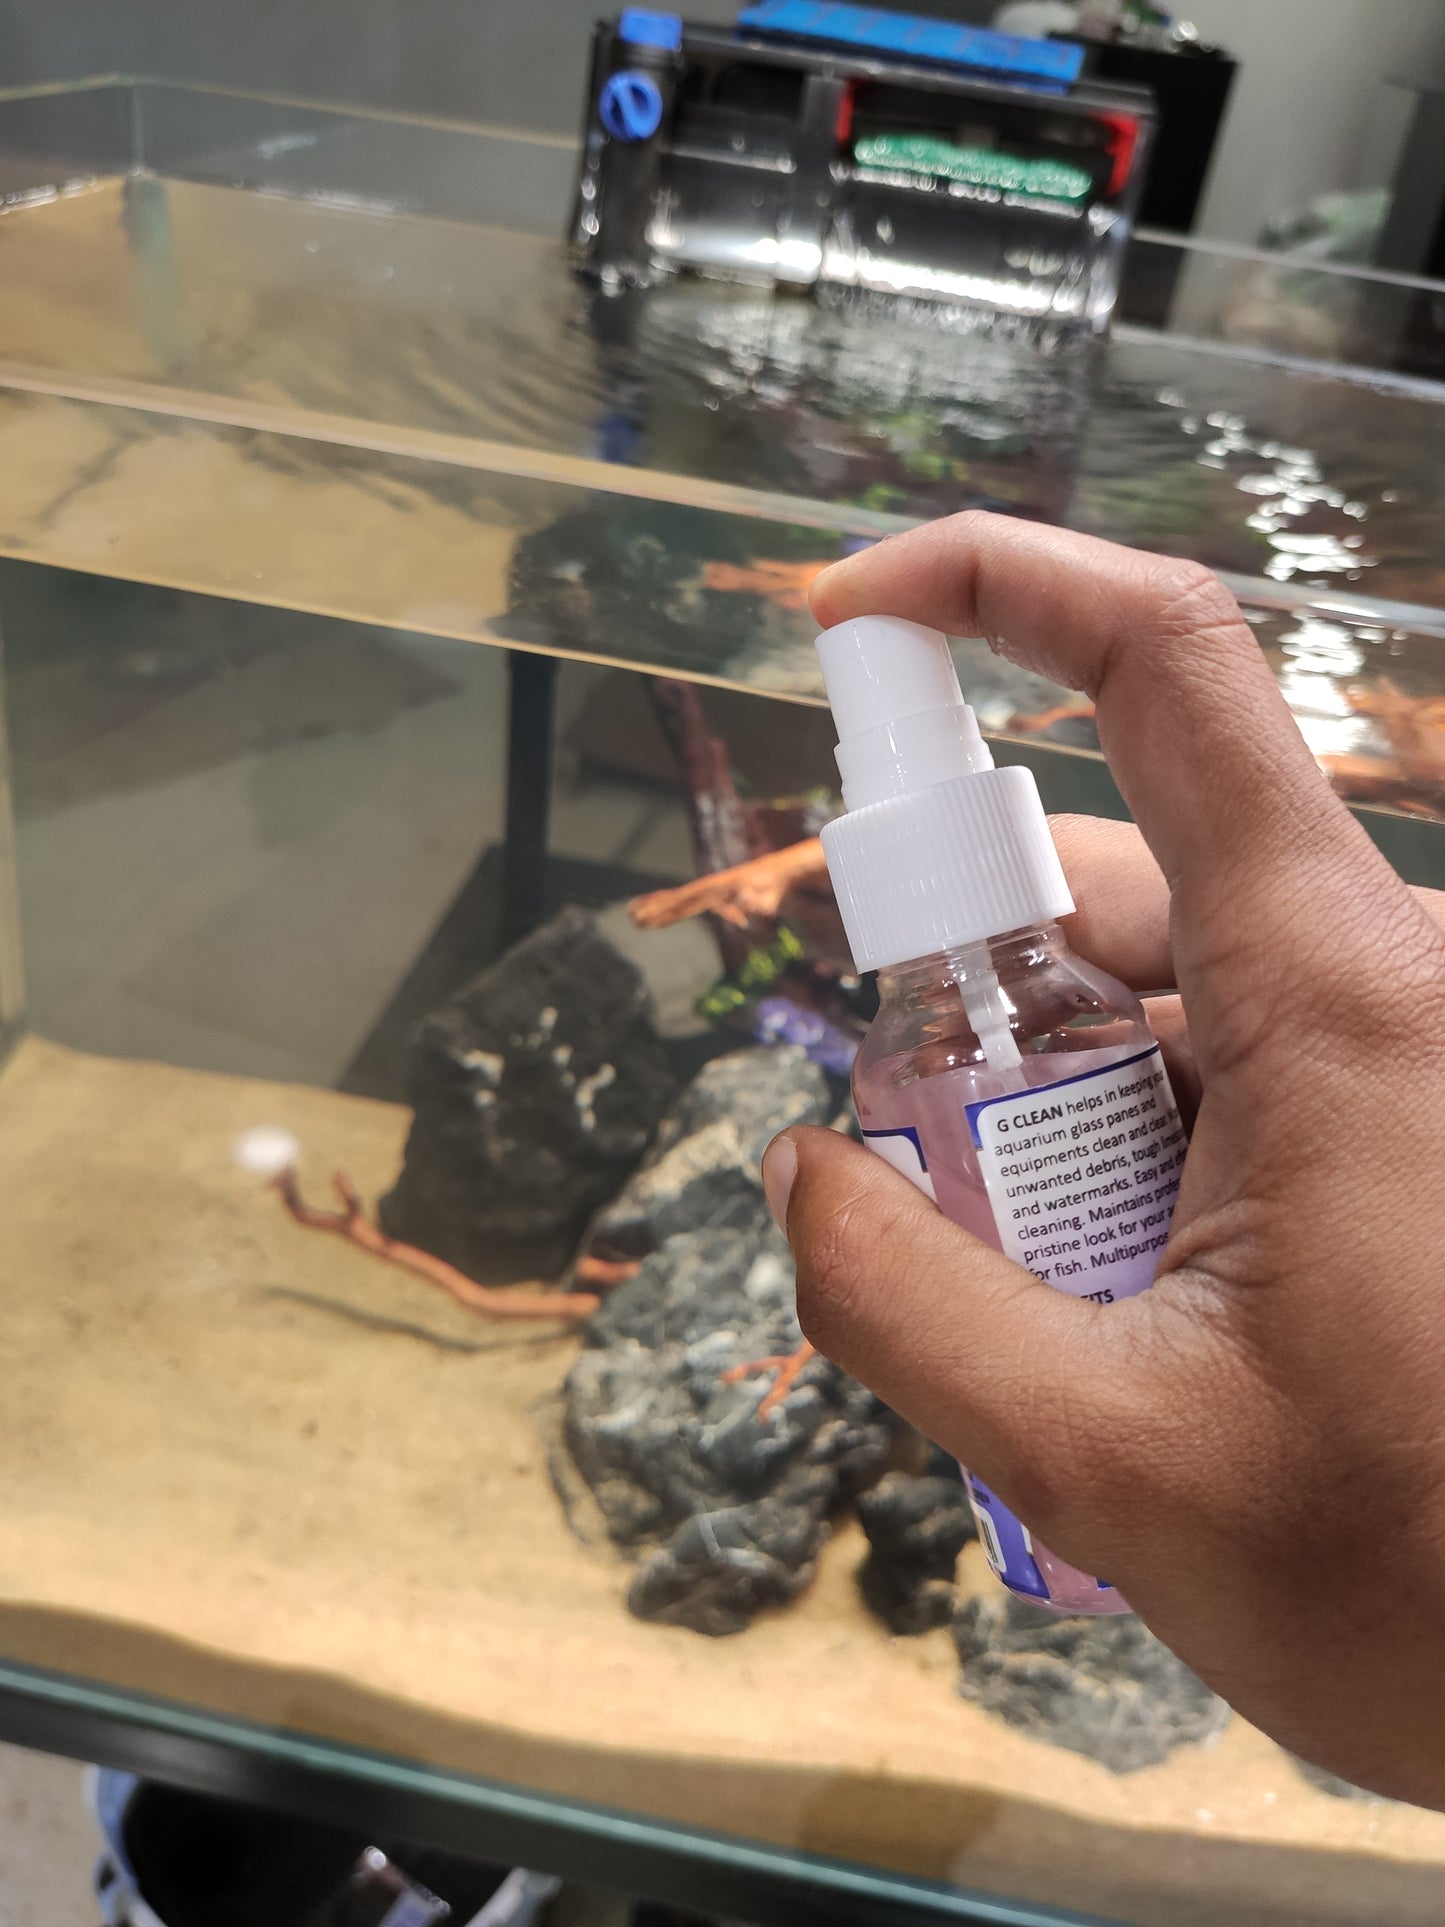 SFlora G CLEAN Aquarium Glass/Equipment Cleaner, 100ML | Liquid Glass Cleaner for Spotless Aquarium Fish Tank Glass - Safe for Fish